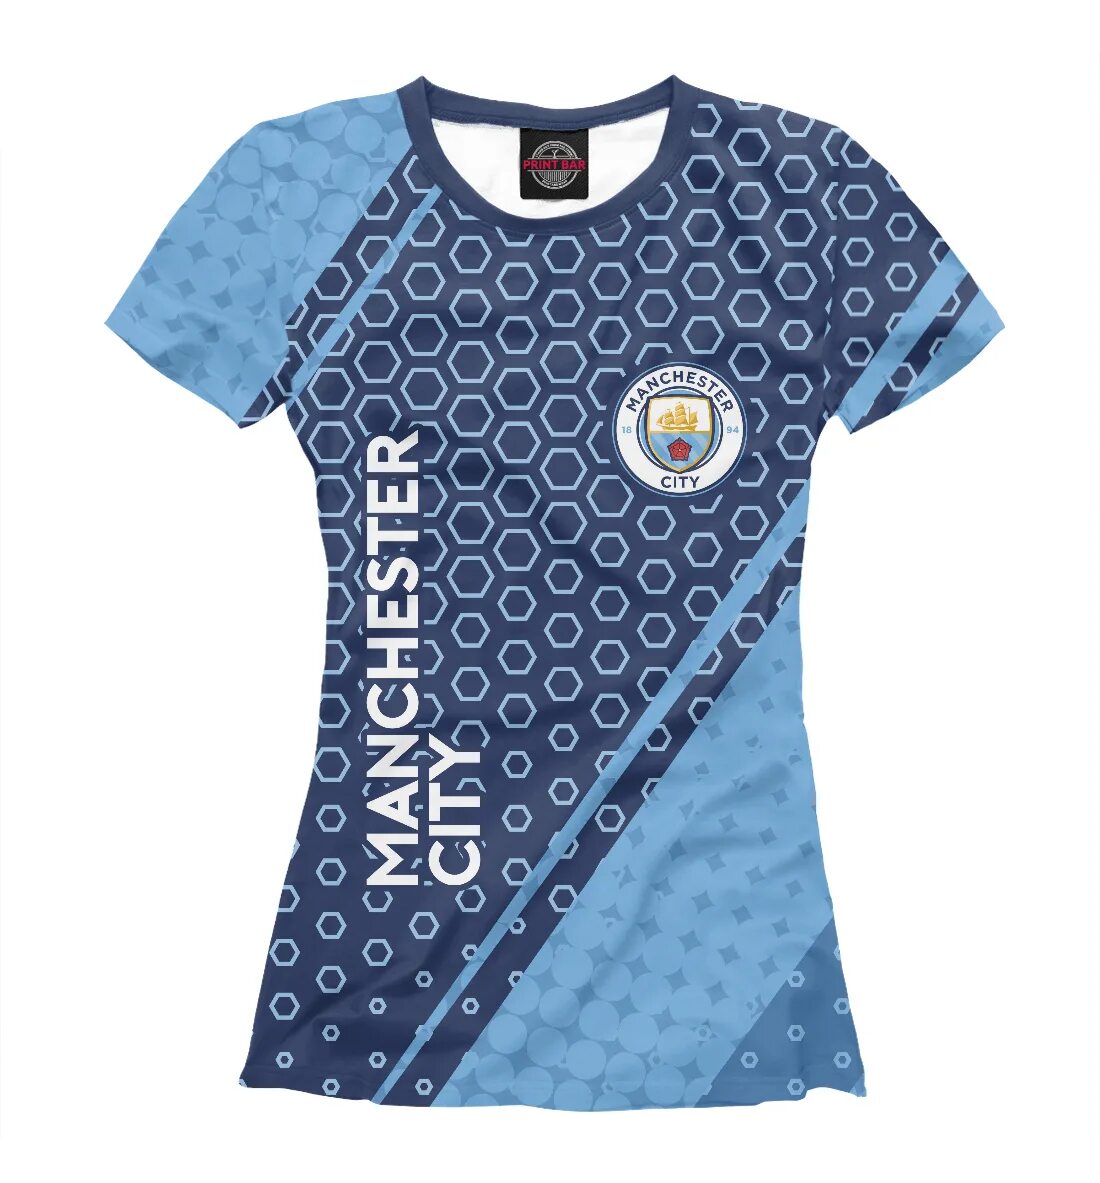 Футболка манчестер сити. Футболка Manchester City. Футболка Манчестер Ситти футболки. Футболка Манчестер Сити купить.